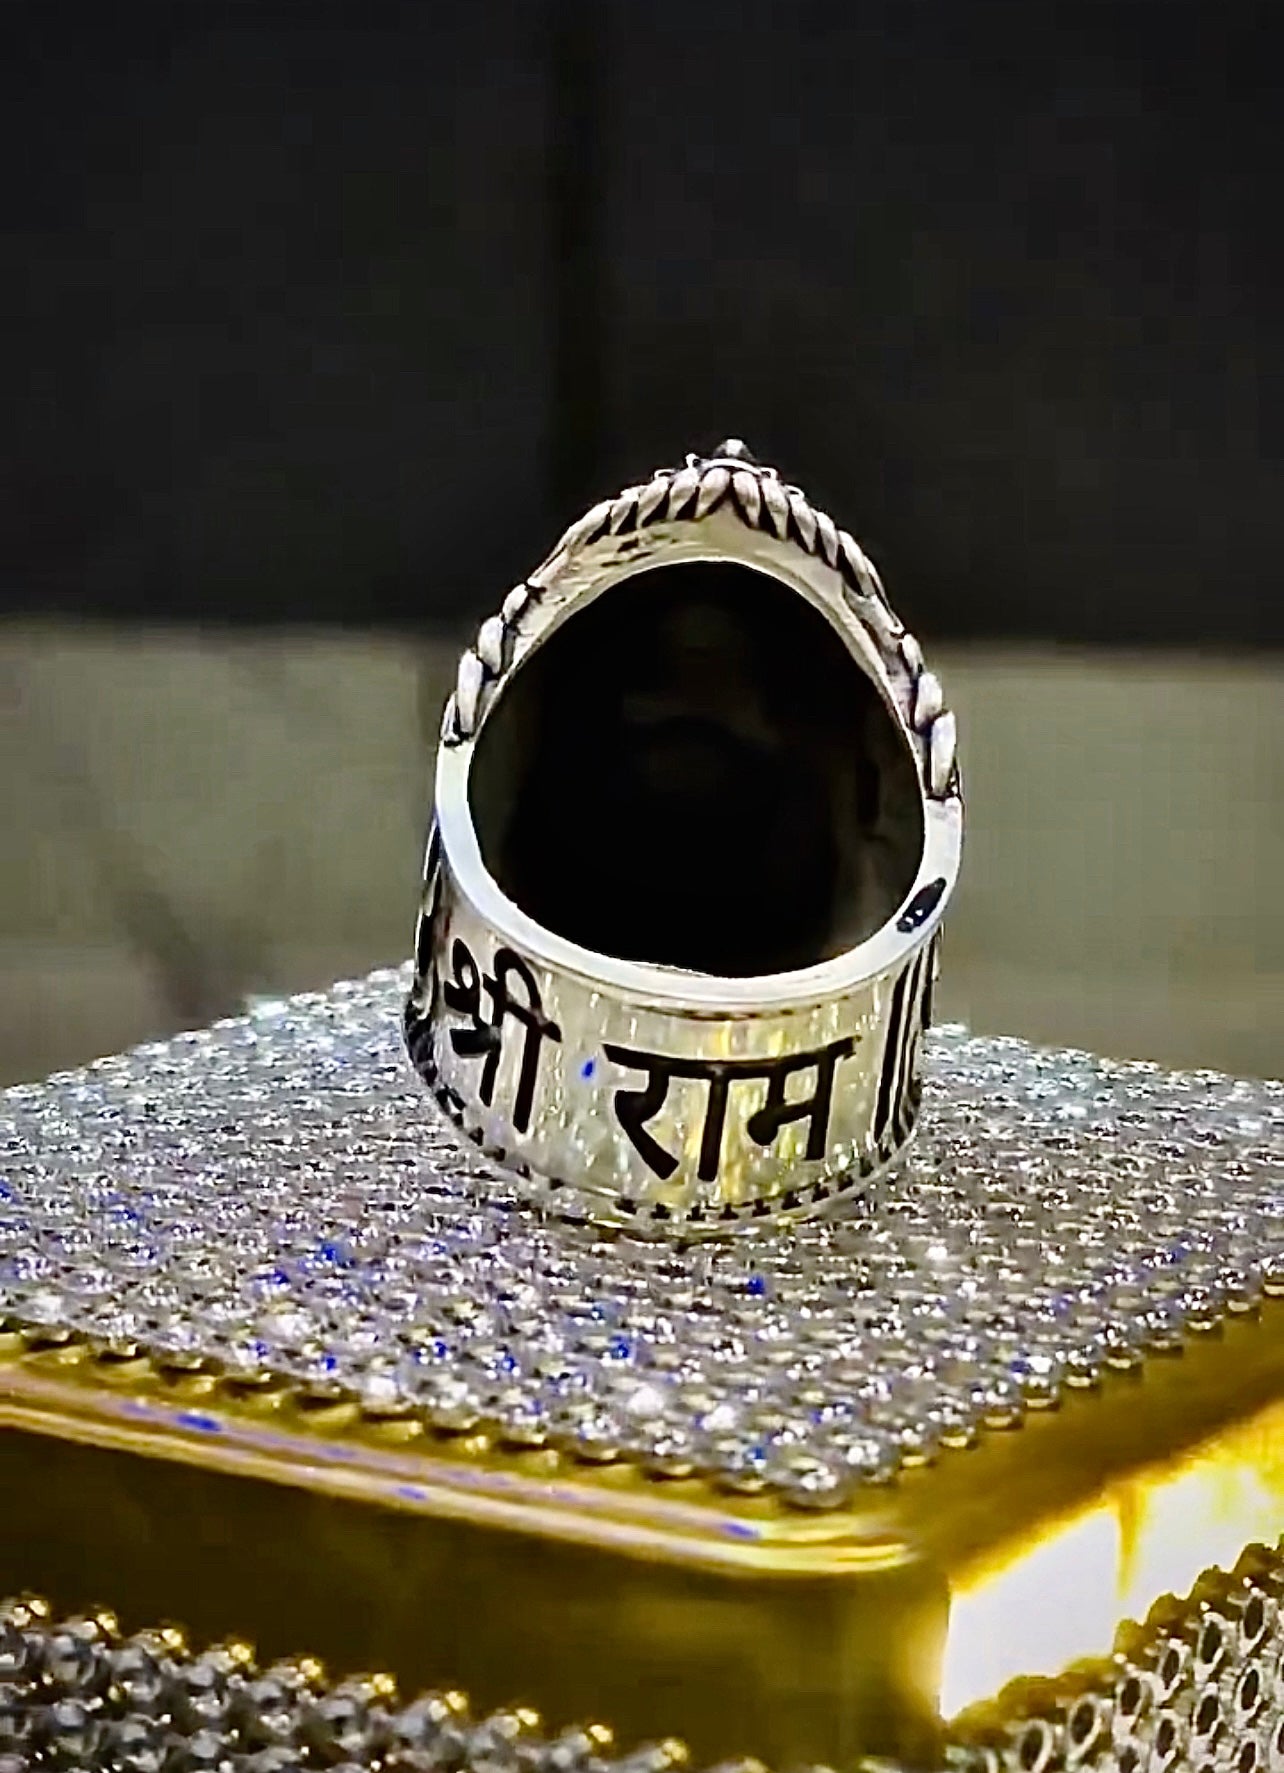 Latest Hanuman ring 4grams 916 gold@Mohanakrishna Lopinti - YouTube